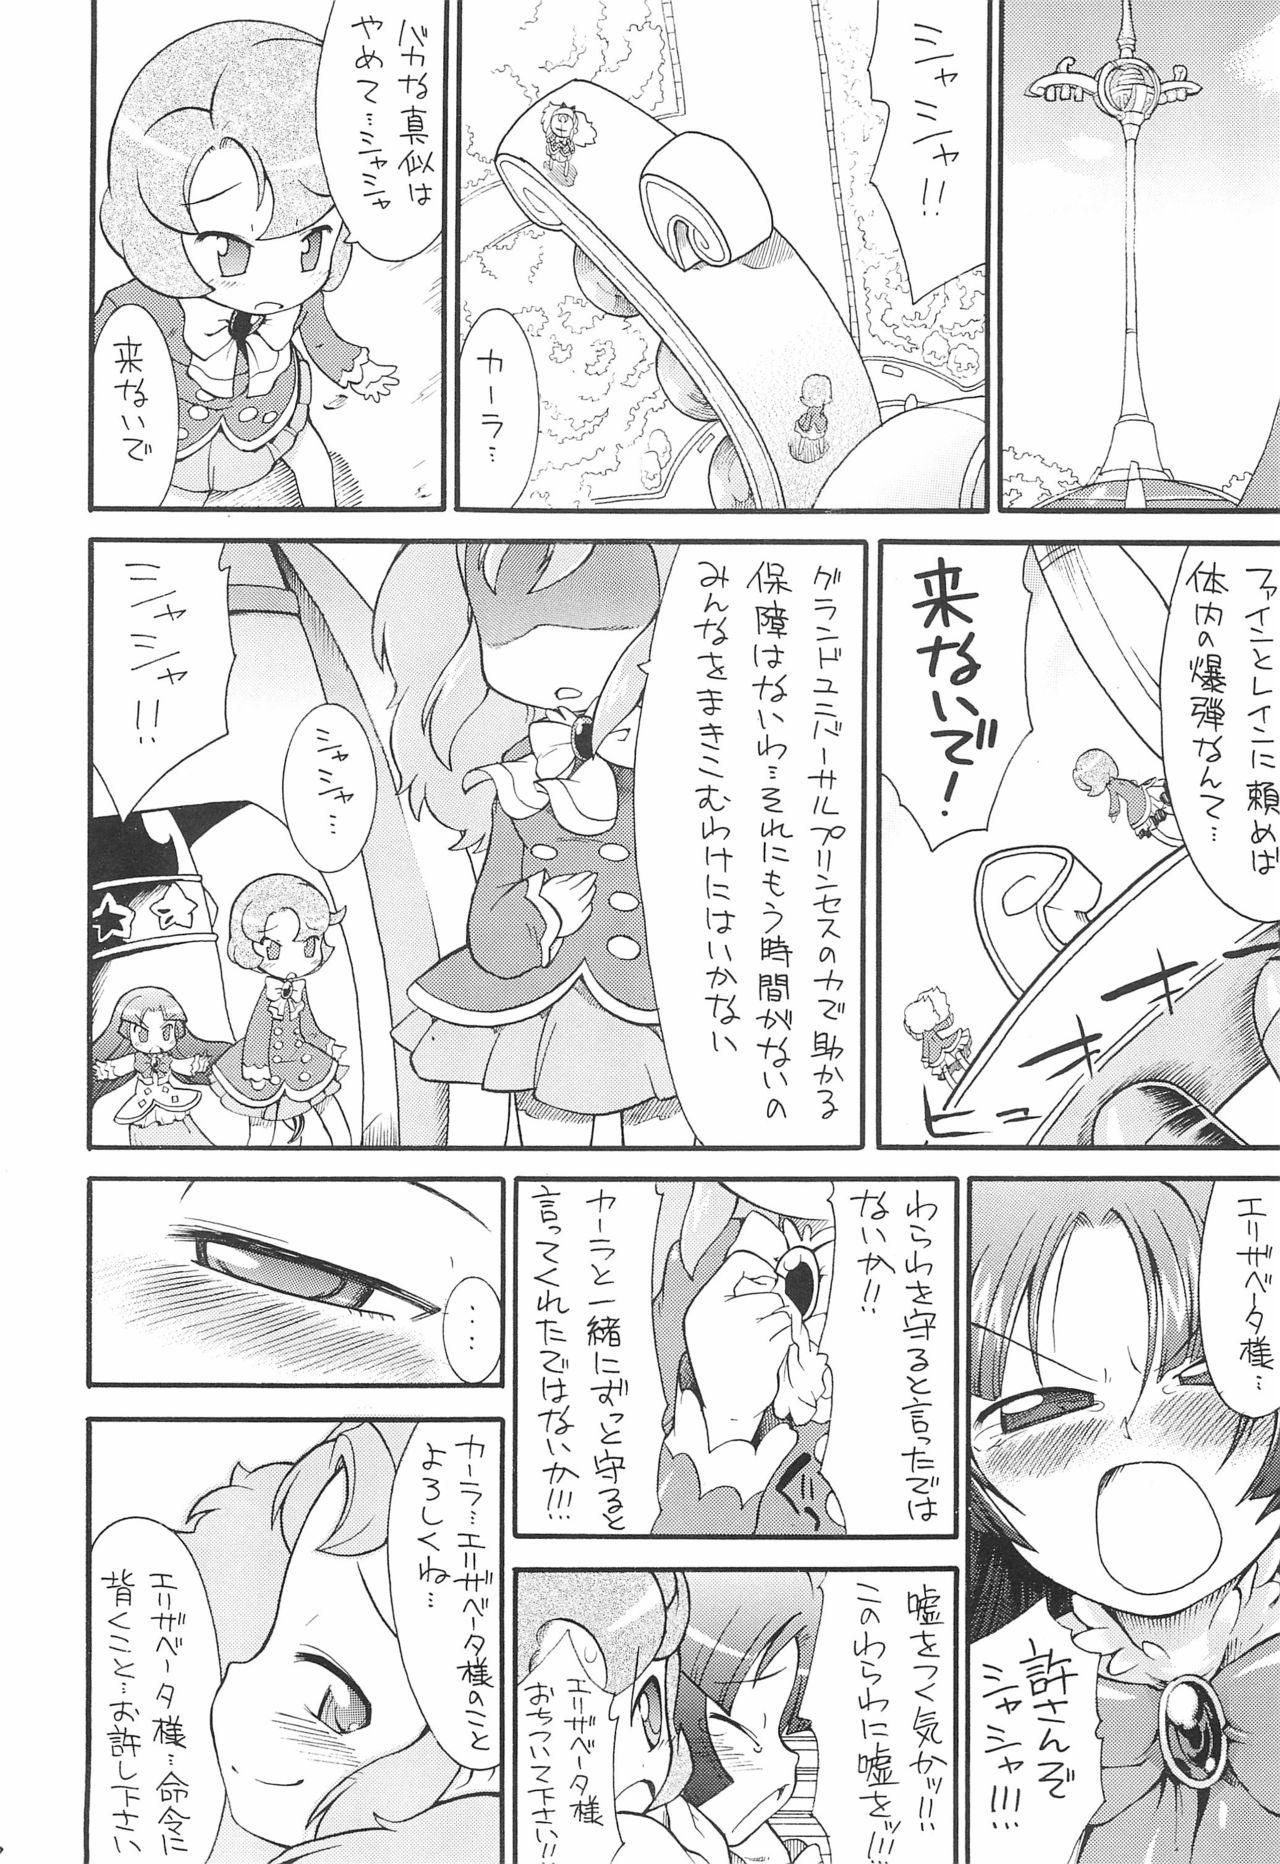 Vagina Kodomo ja Neenda Princess nanda! 6 - Fushigiboshi no futagohime | twin princesses of the wonder planet Pervs - Page 6